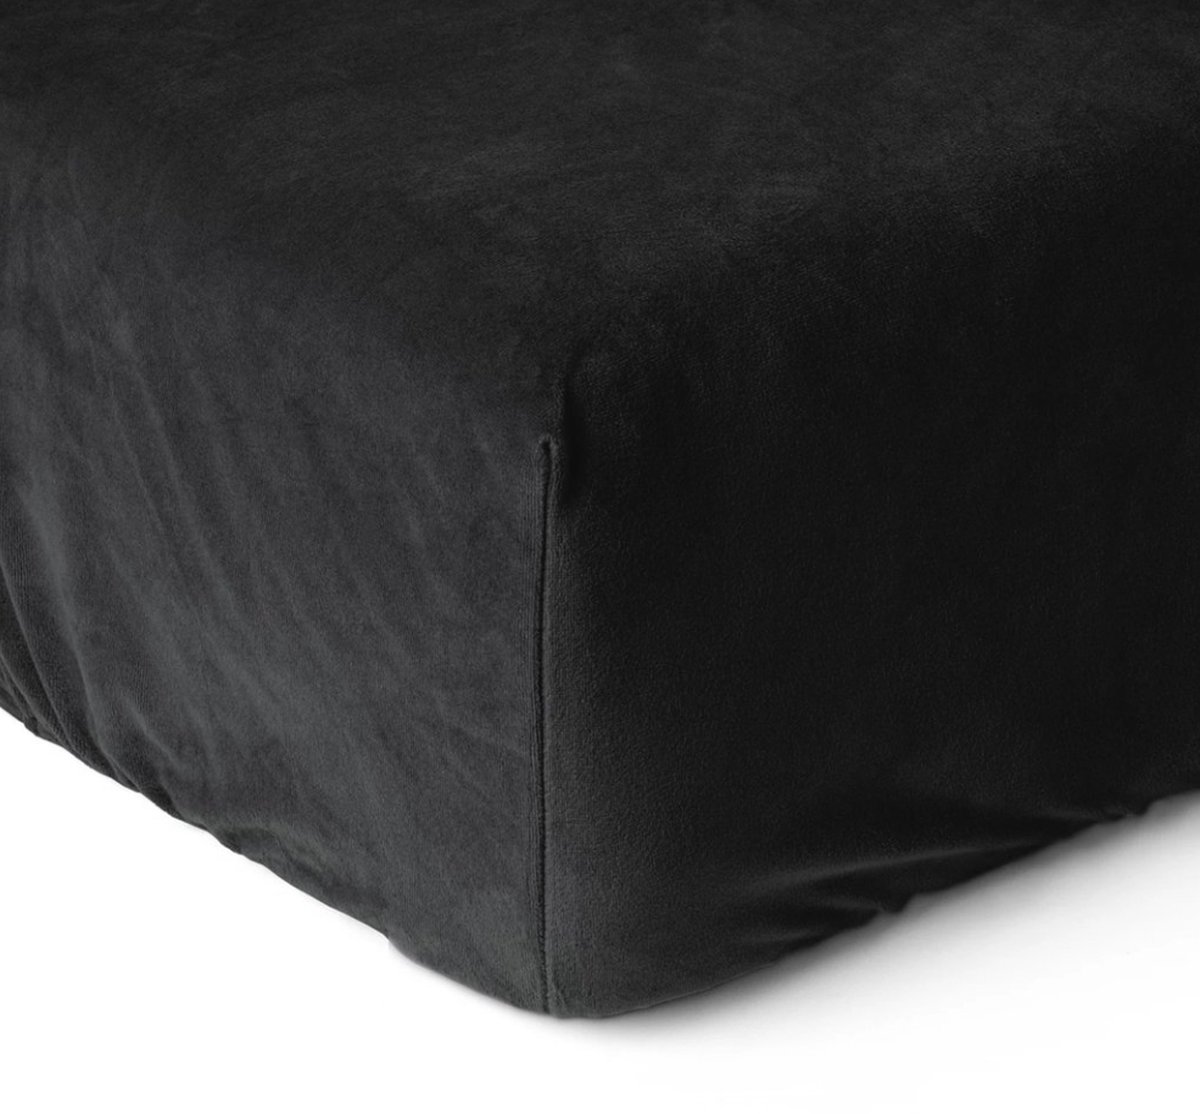 Fluweel zachte velvet hoeslaken zwart - 160x200 (lits-jumeaux) - dikke kwaliteit - zeer comfortabel - ideale pasvorm